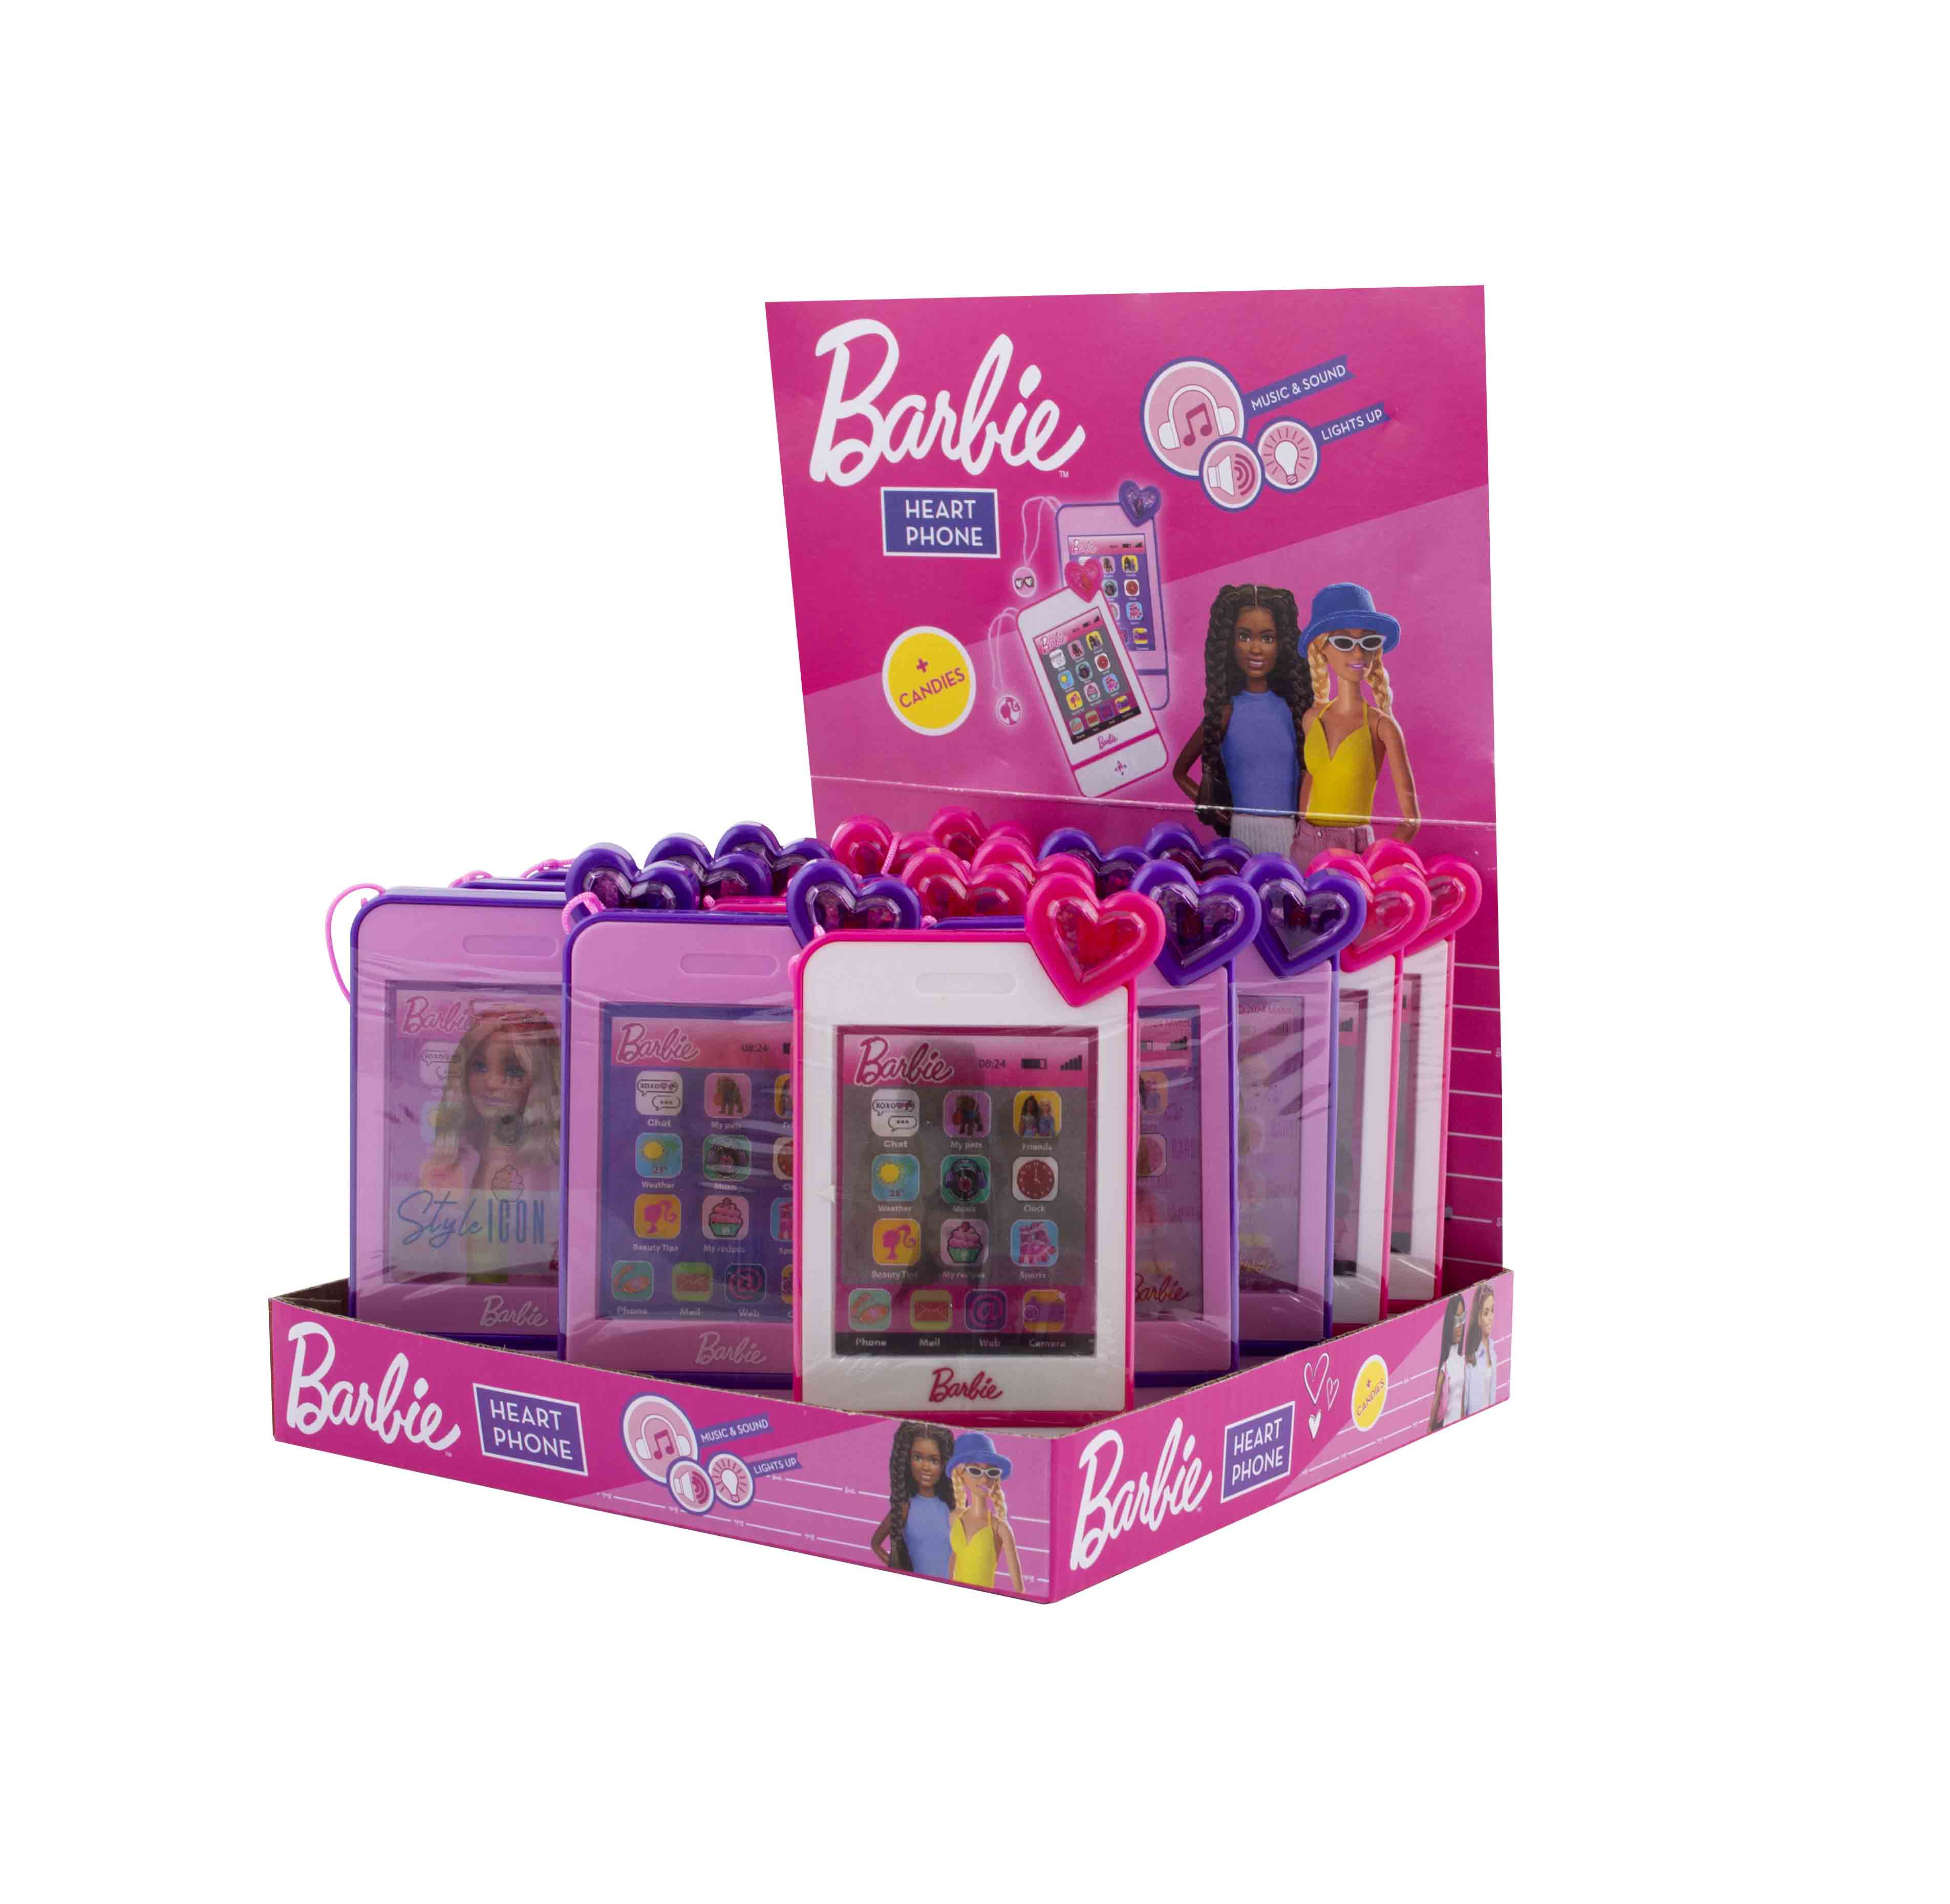 Barbie Dreamtopia Magic Phone - hrací telefon s cukrovinkou 12g